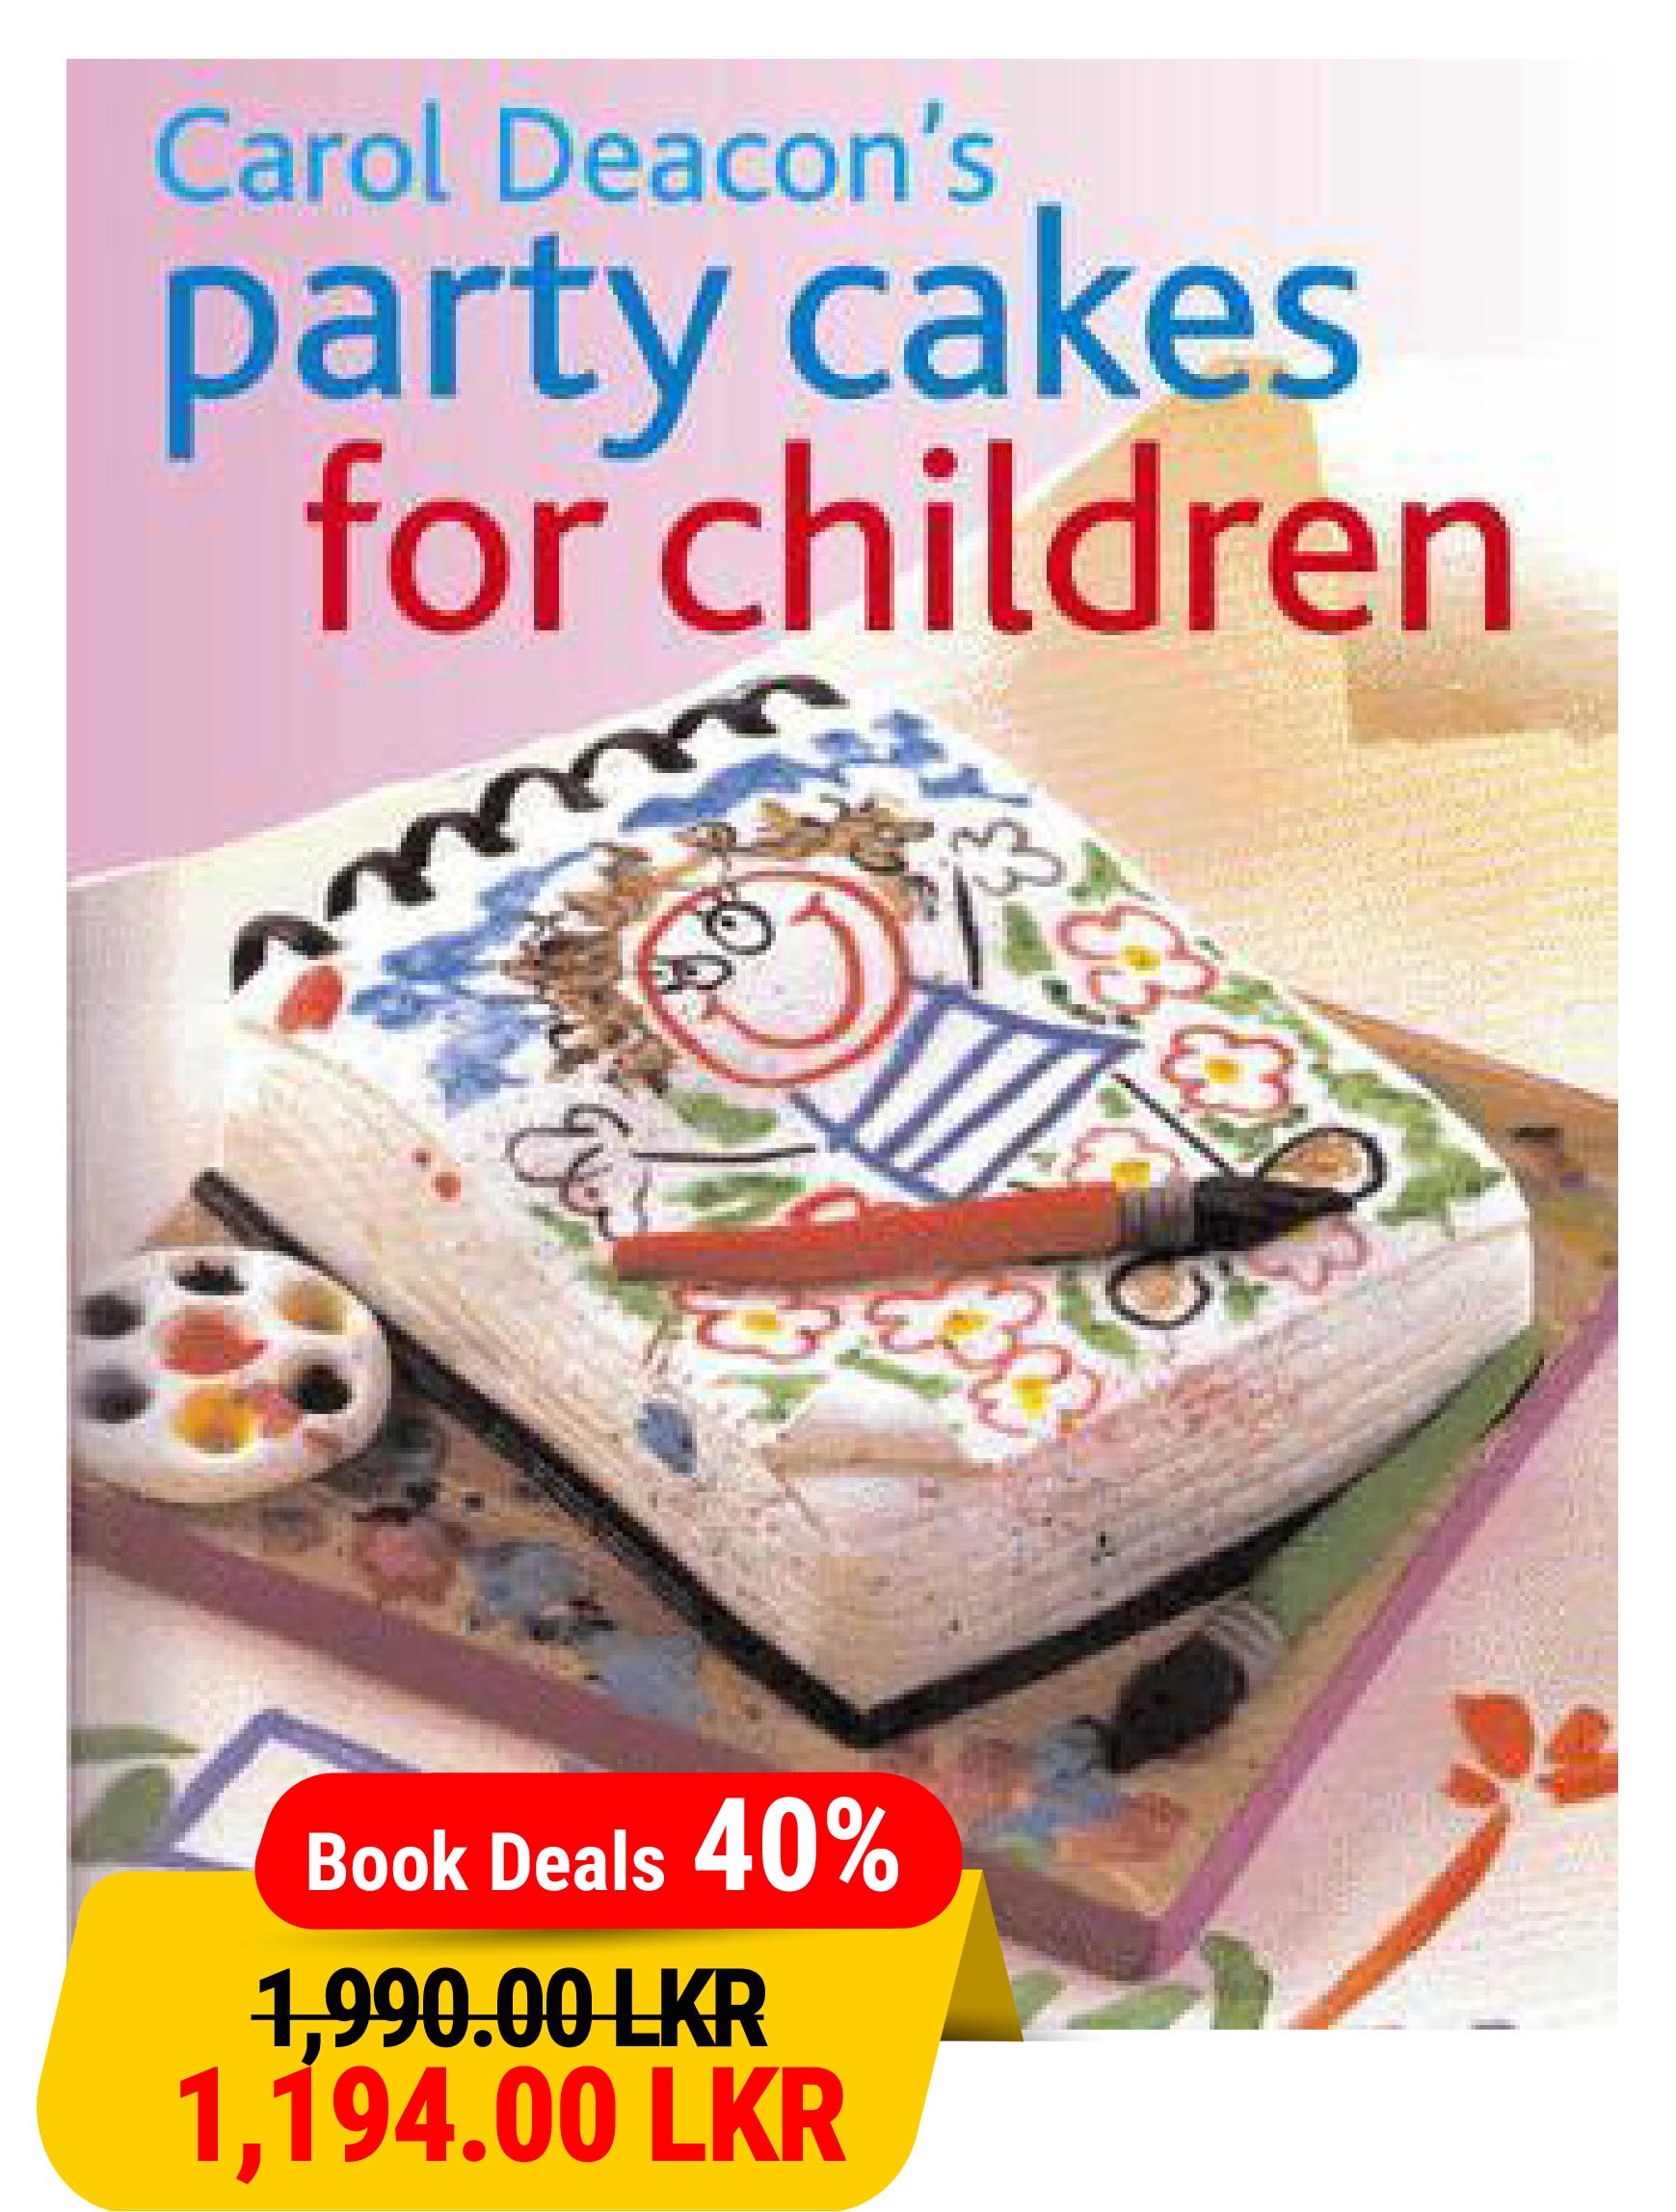 Carol Deacon's party cakes for children